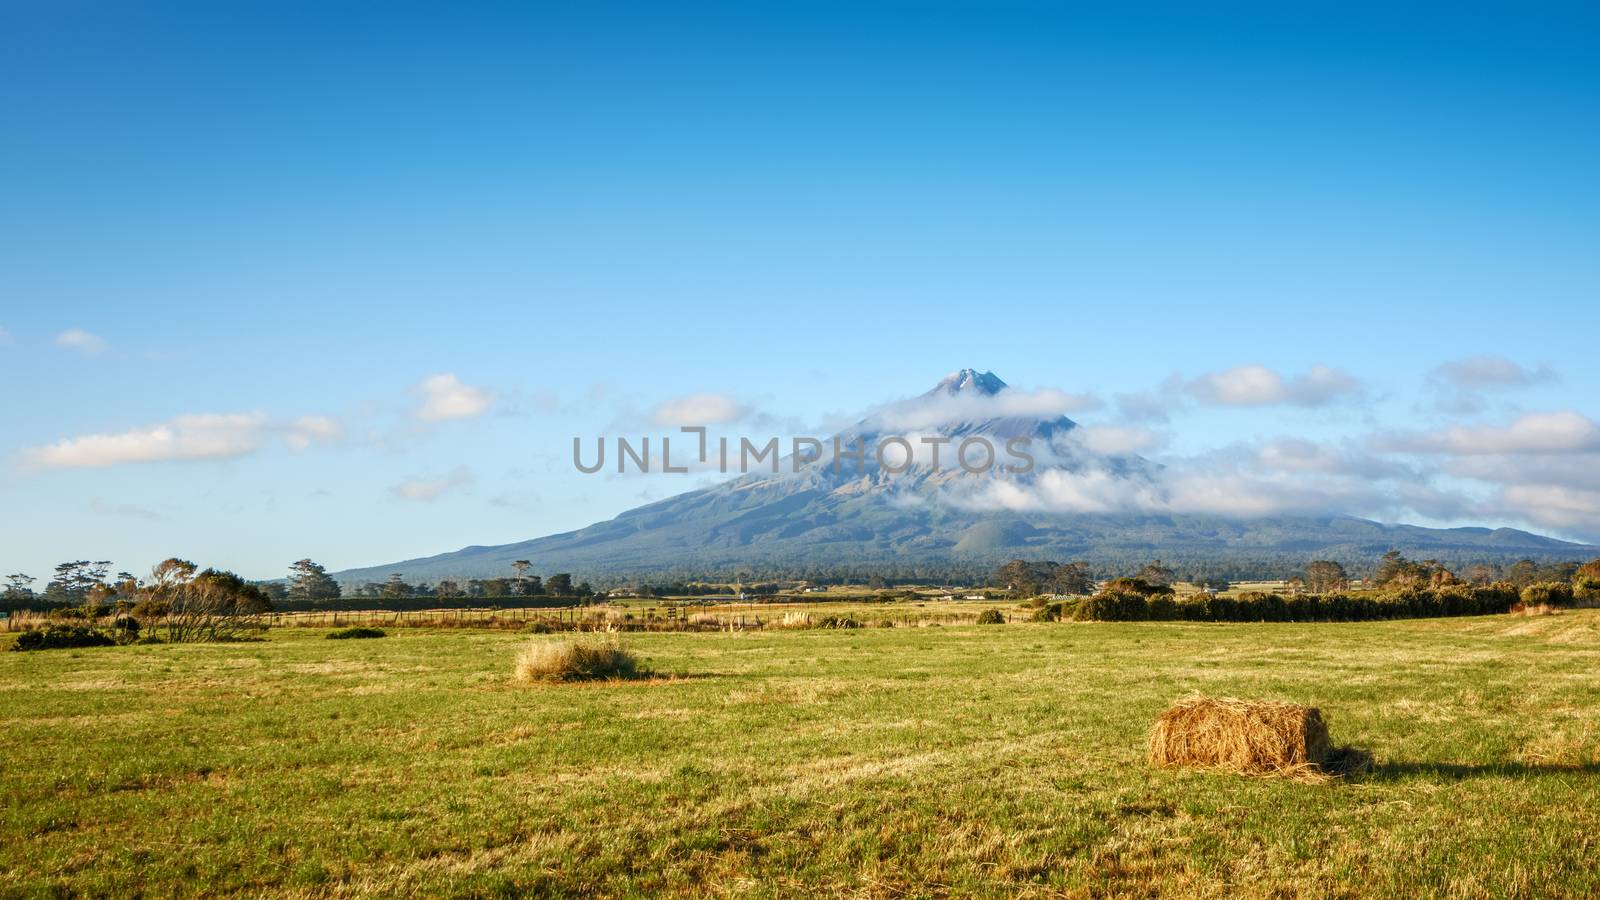 An image of the Mt Taranaki north island of New Zealand